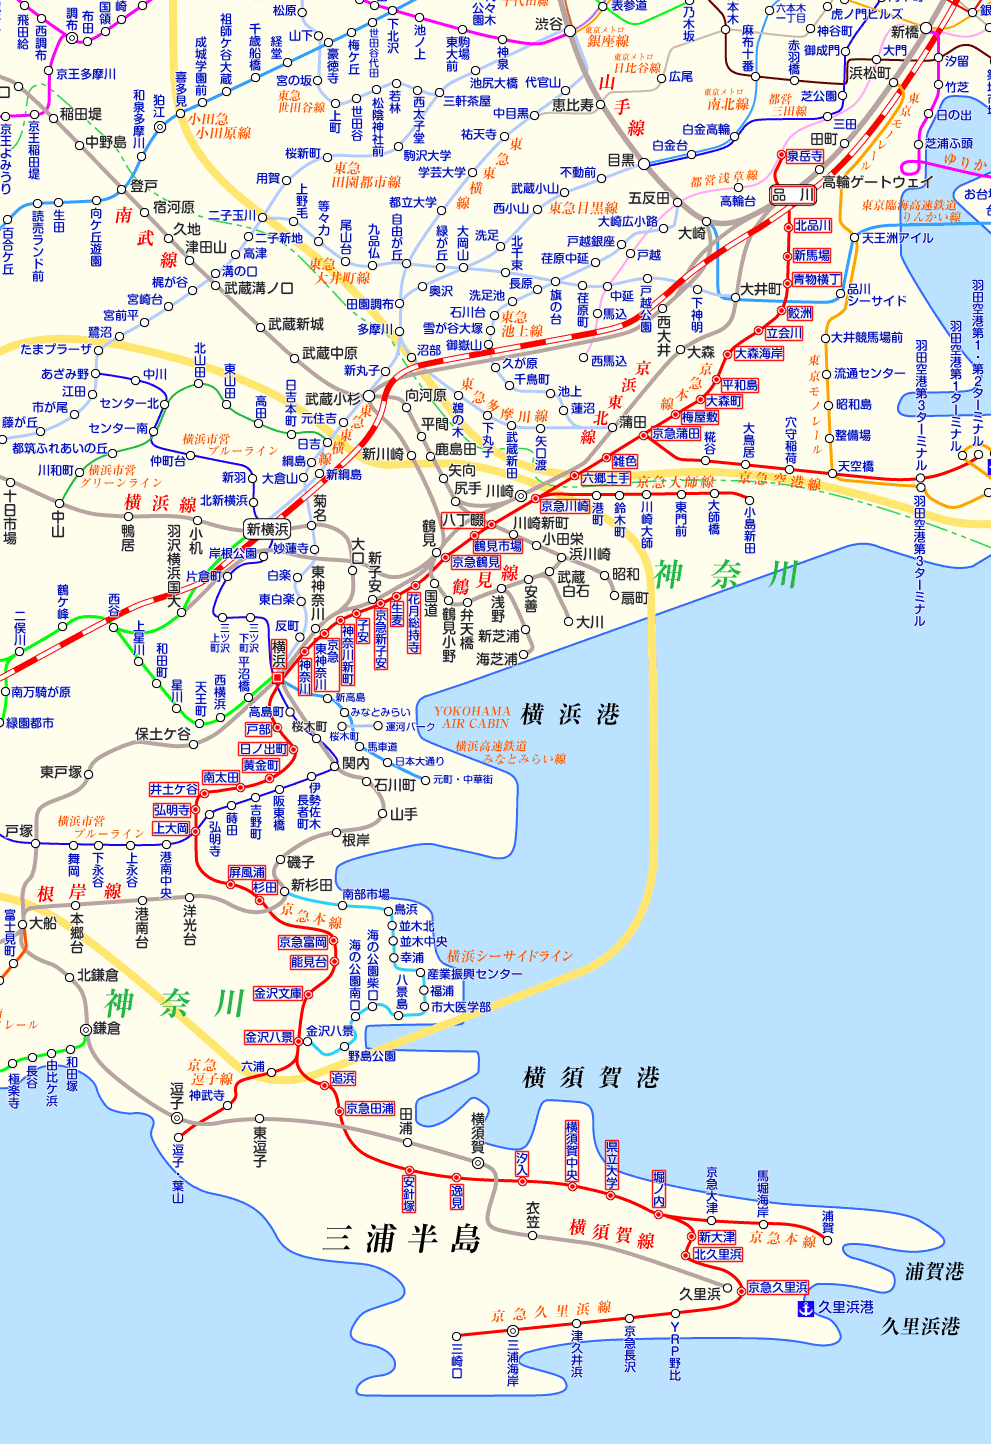 京急線 京急久里浜行きの路線図